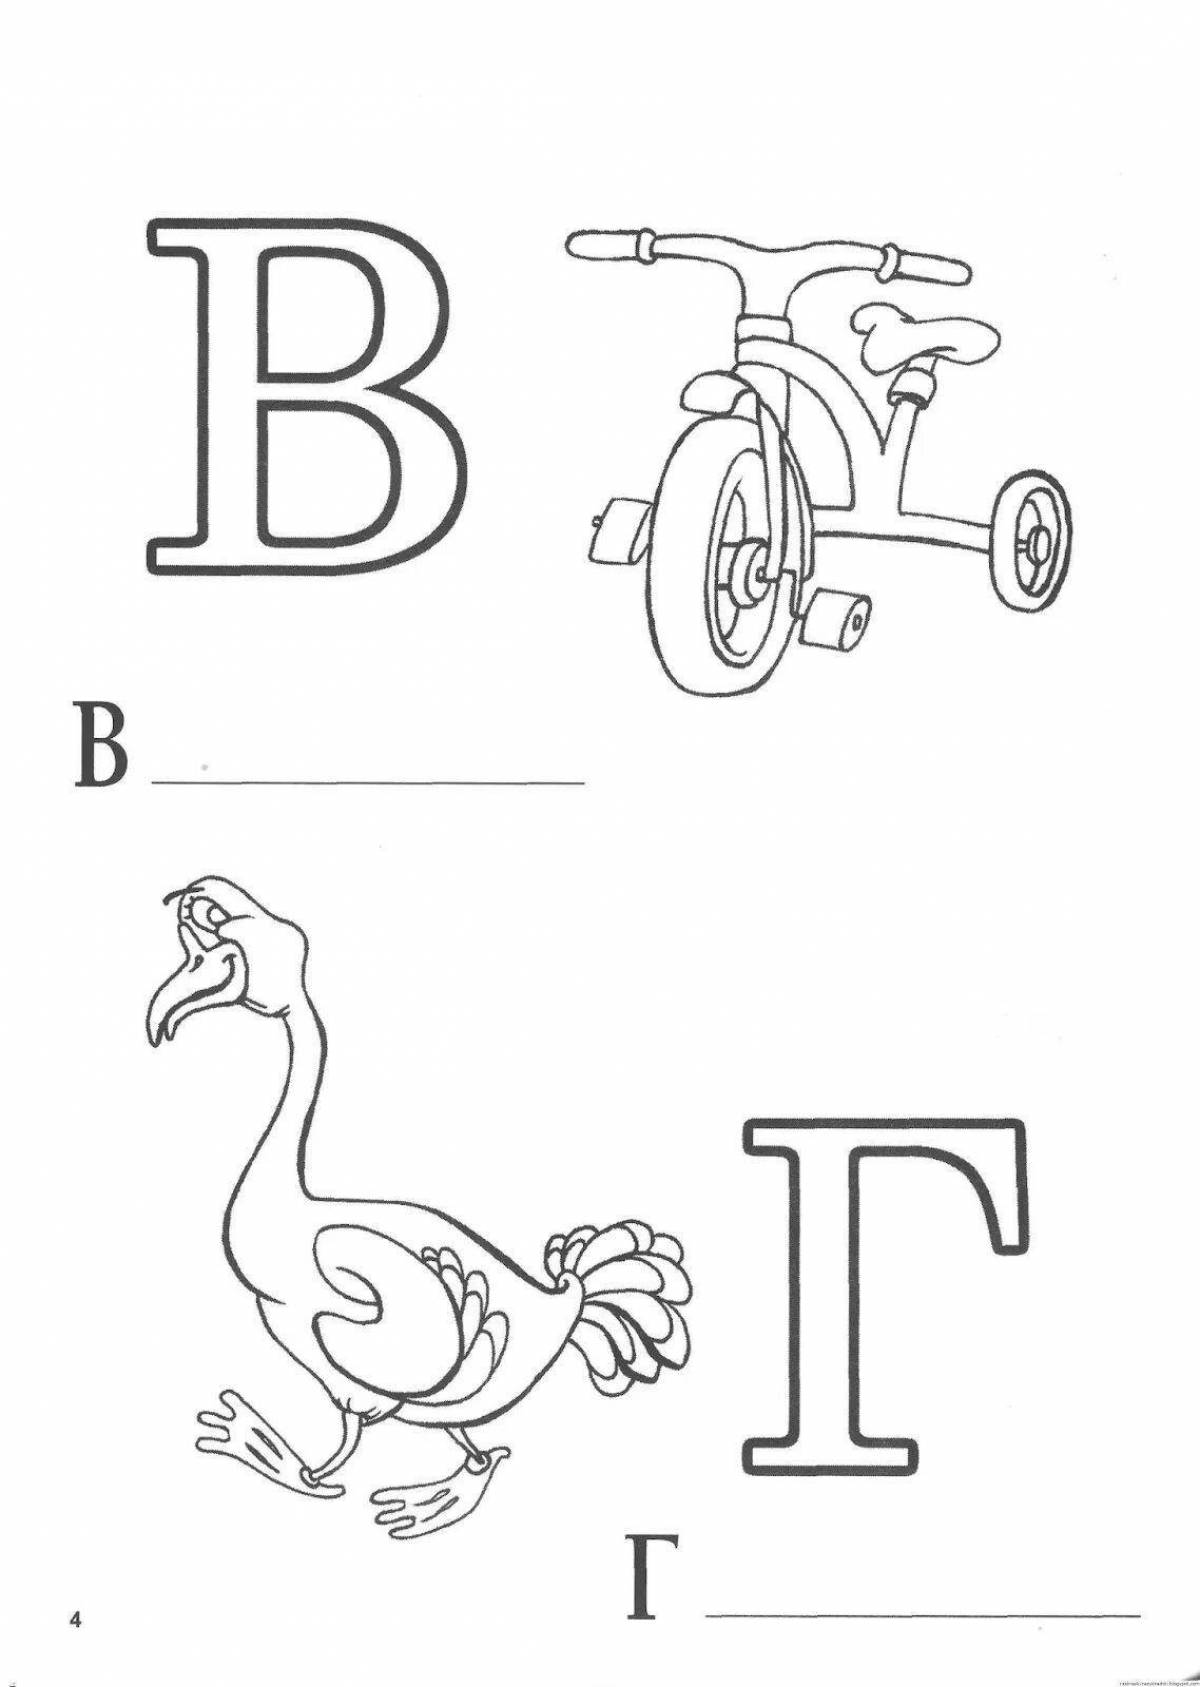 For children 5 years old alphabet #4